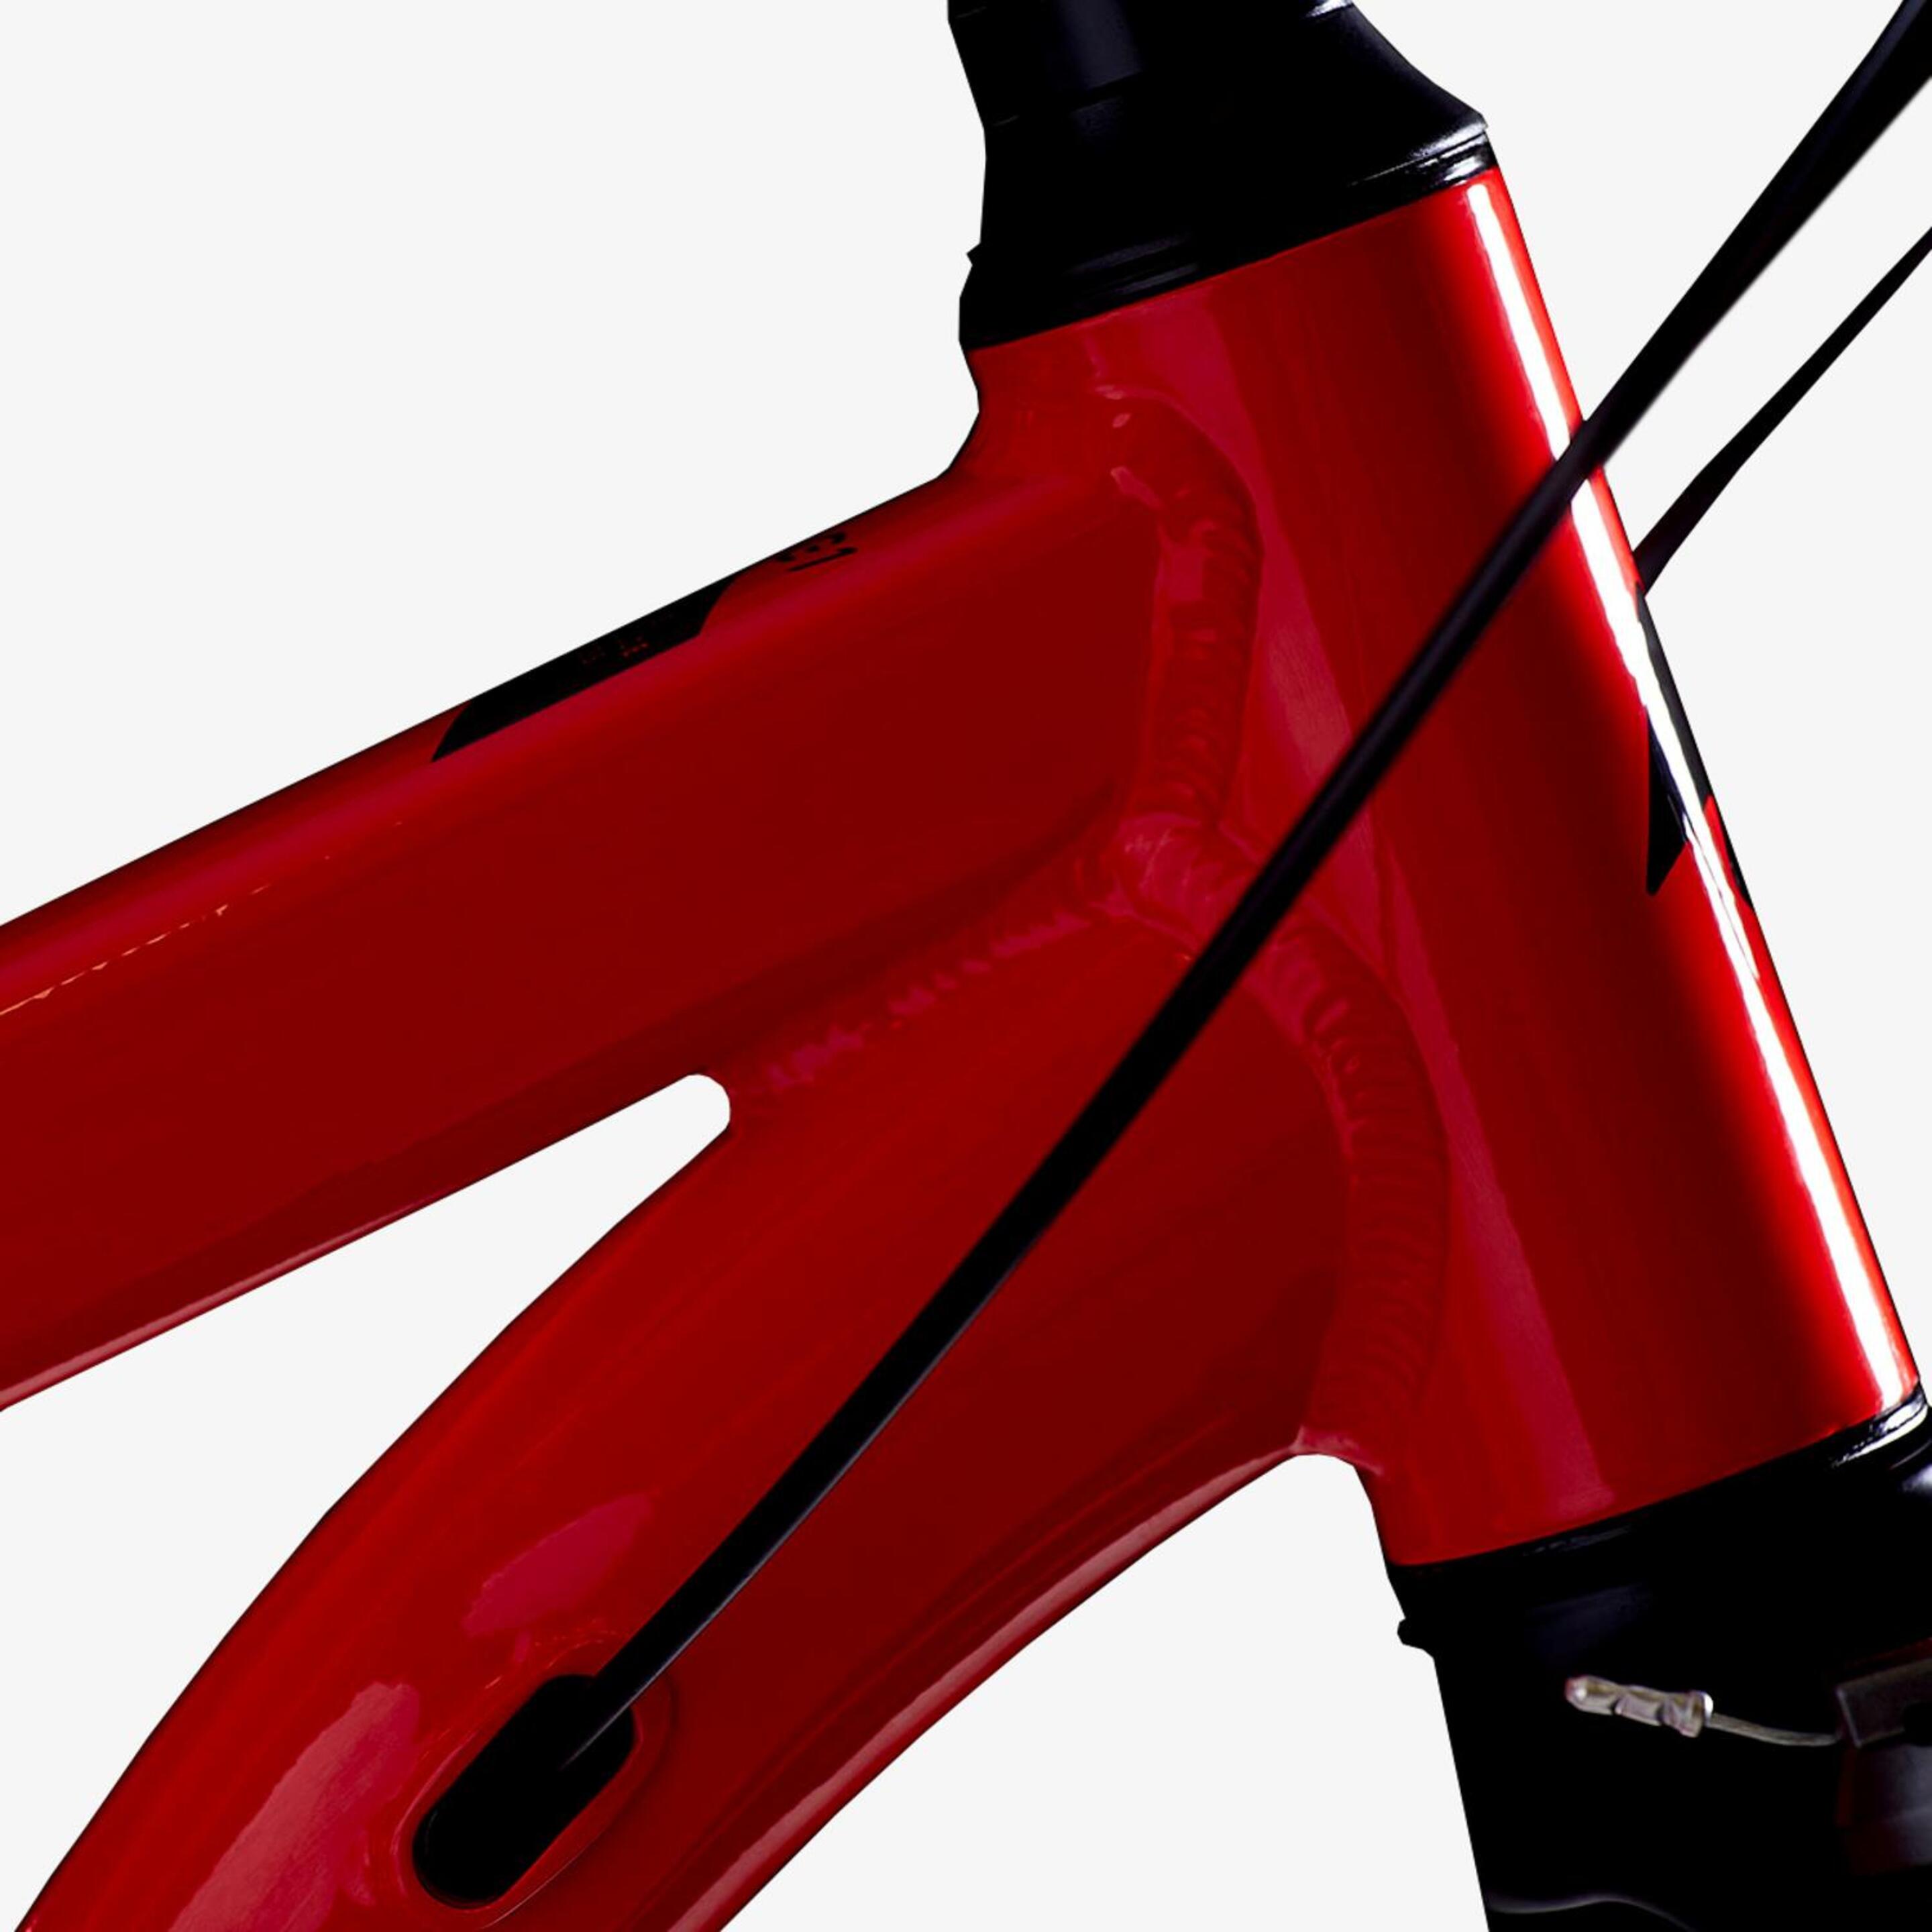 MMR Kuma 10 29" - Roja - Bicicleta Montaña